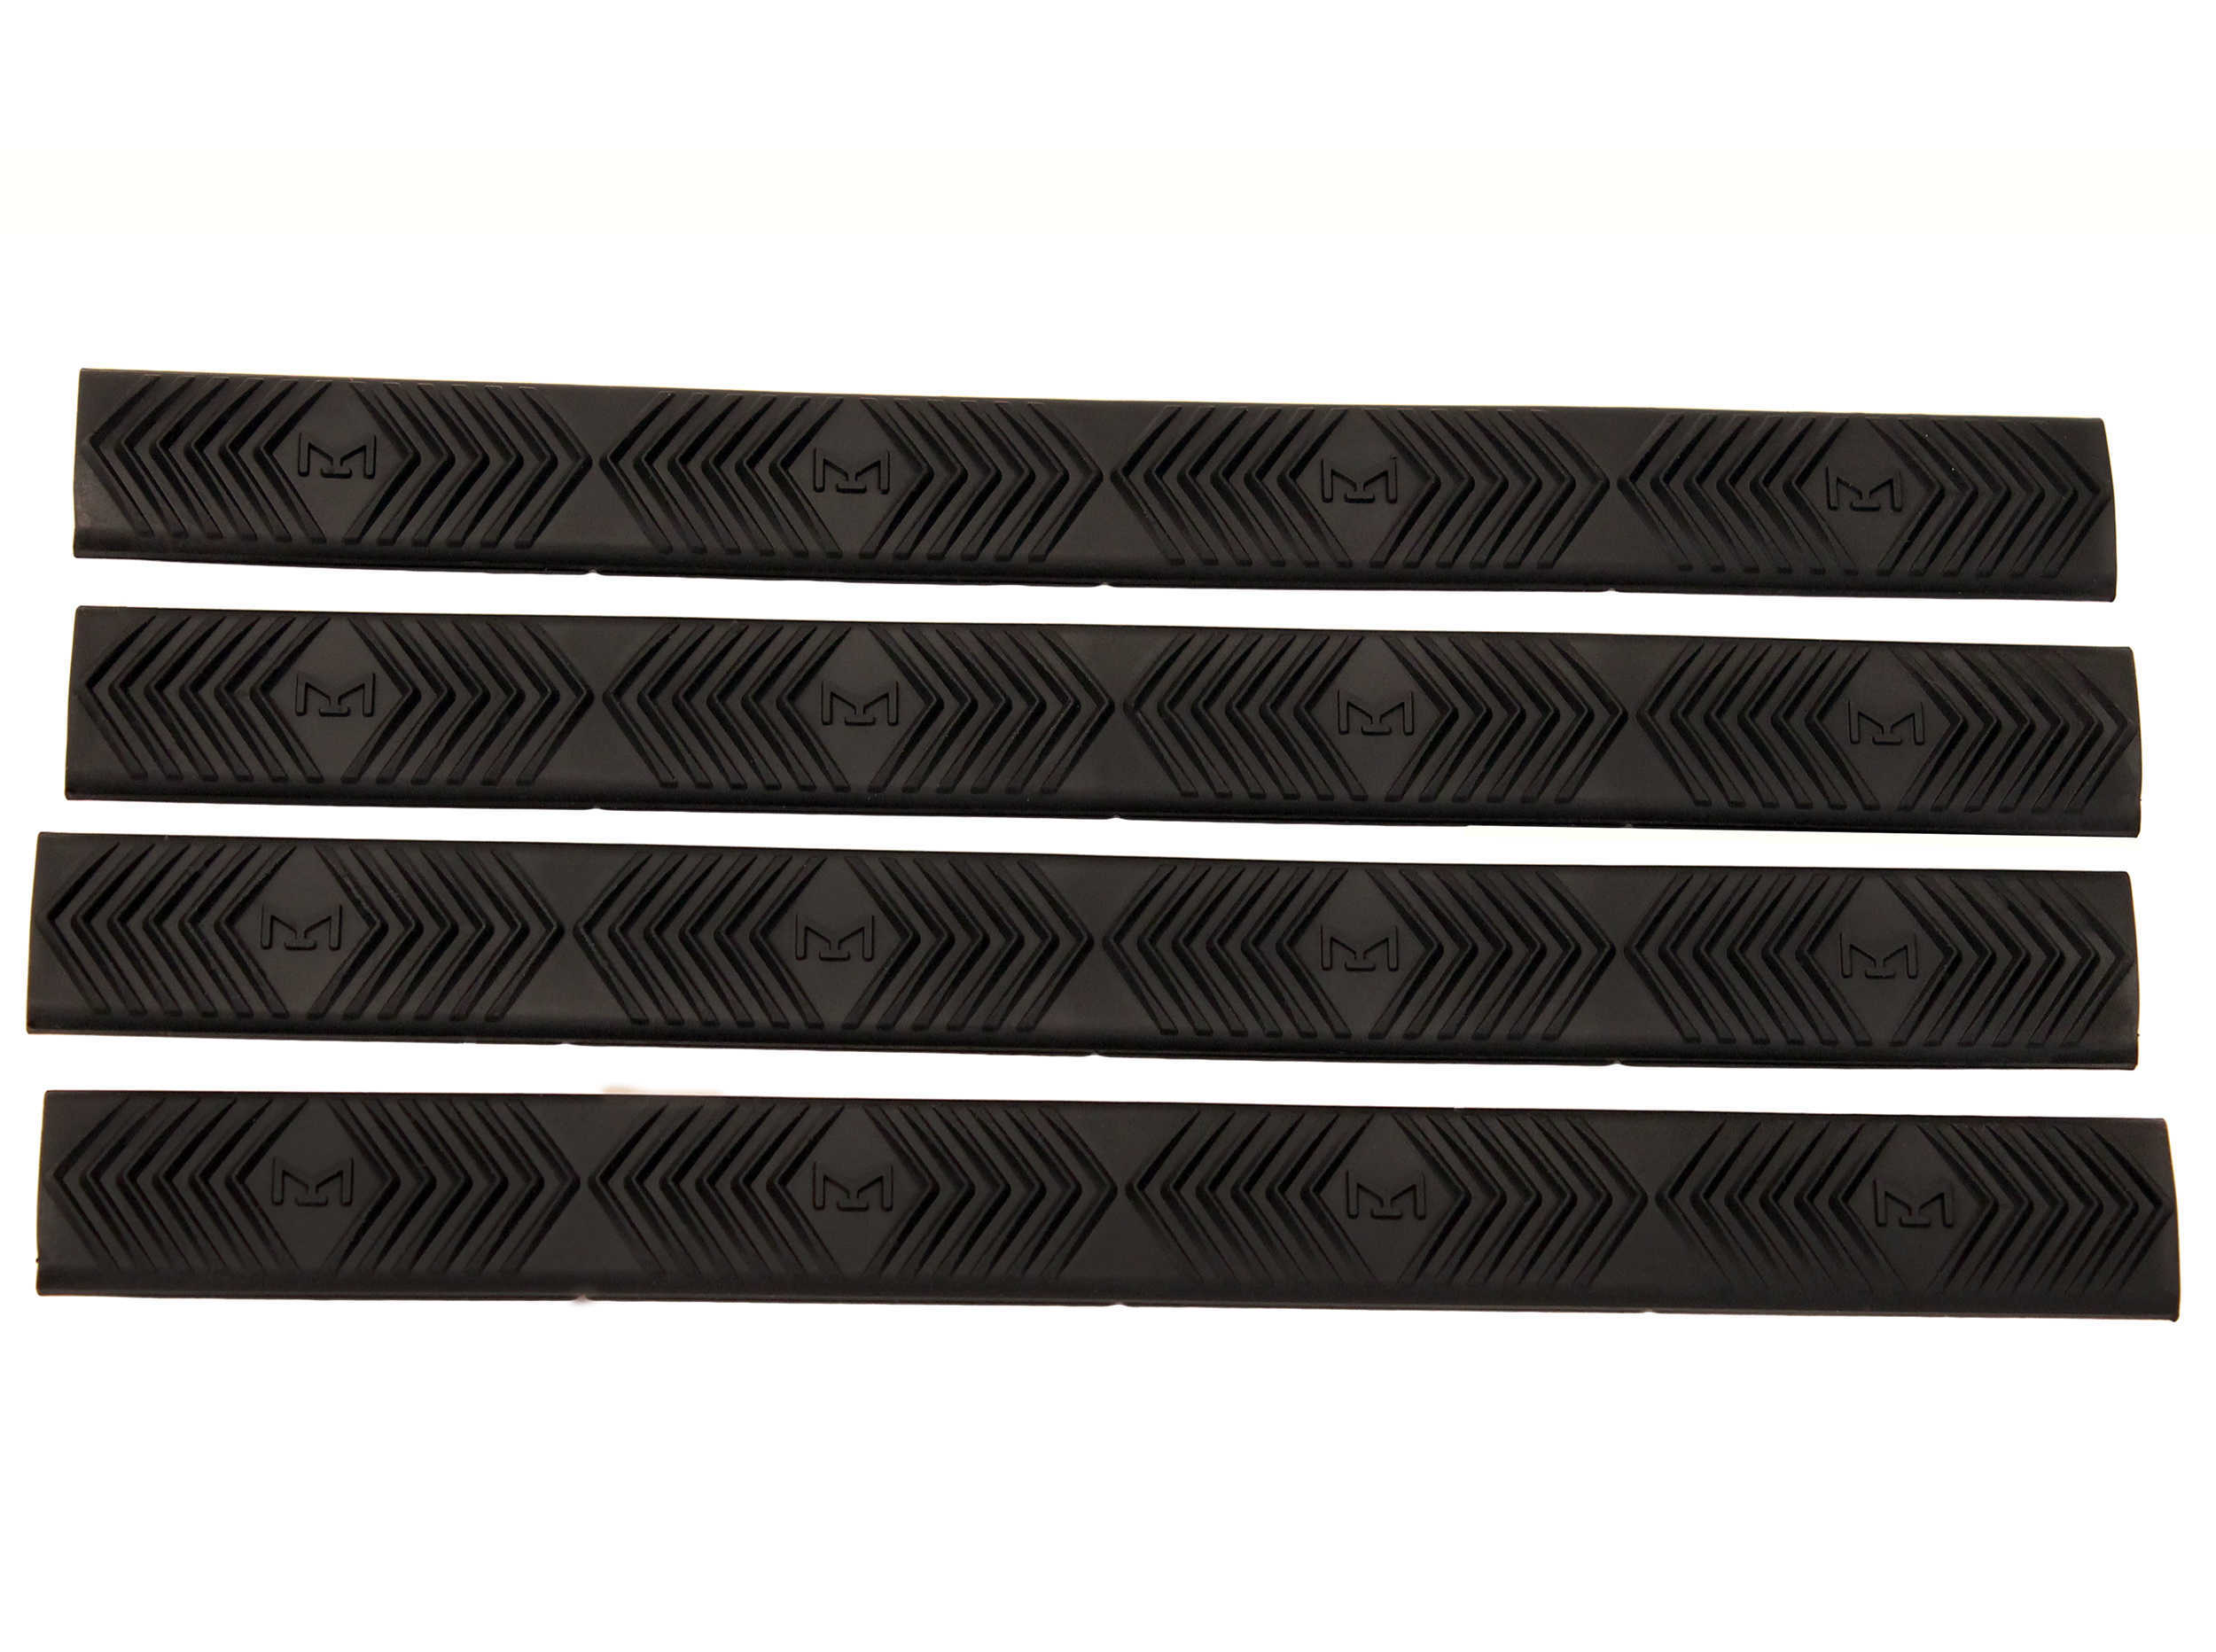 Ergo Grip M-LOK WedgeLok Rail Covers 6 1/4"X5/8" Slot Black Finish 4332-4Pk-Bk